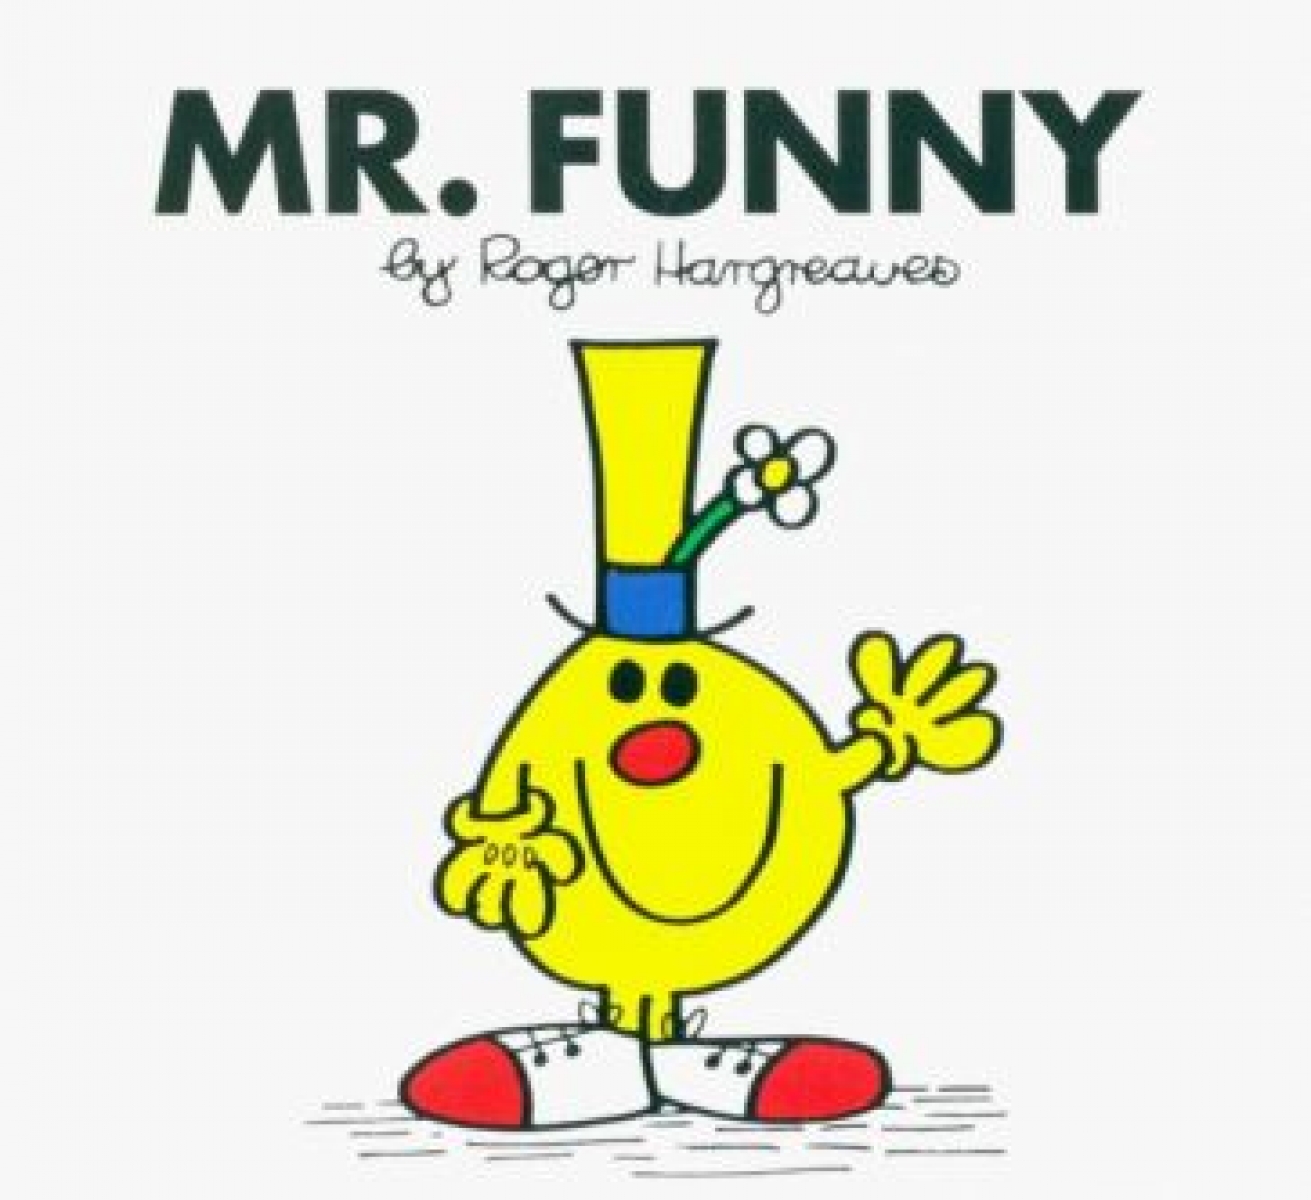 Hargreaves Roger Mr. Funny 